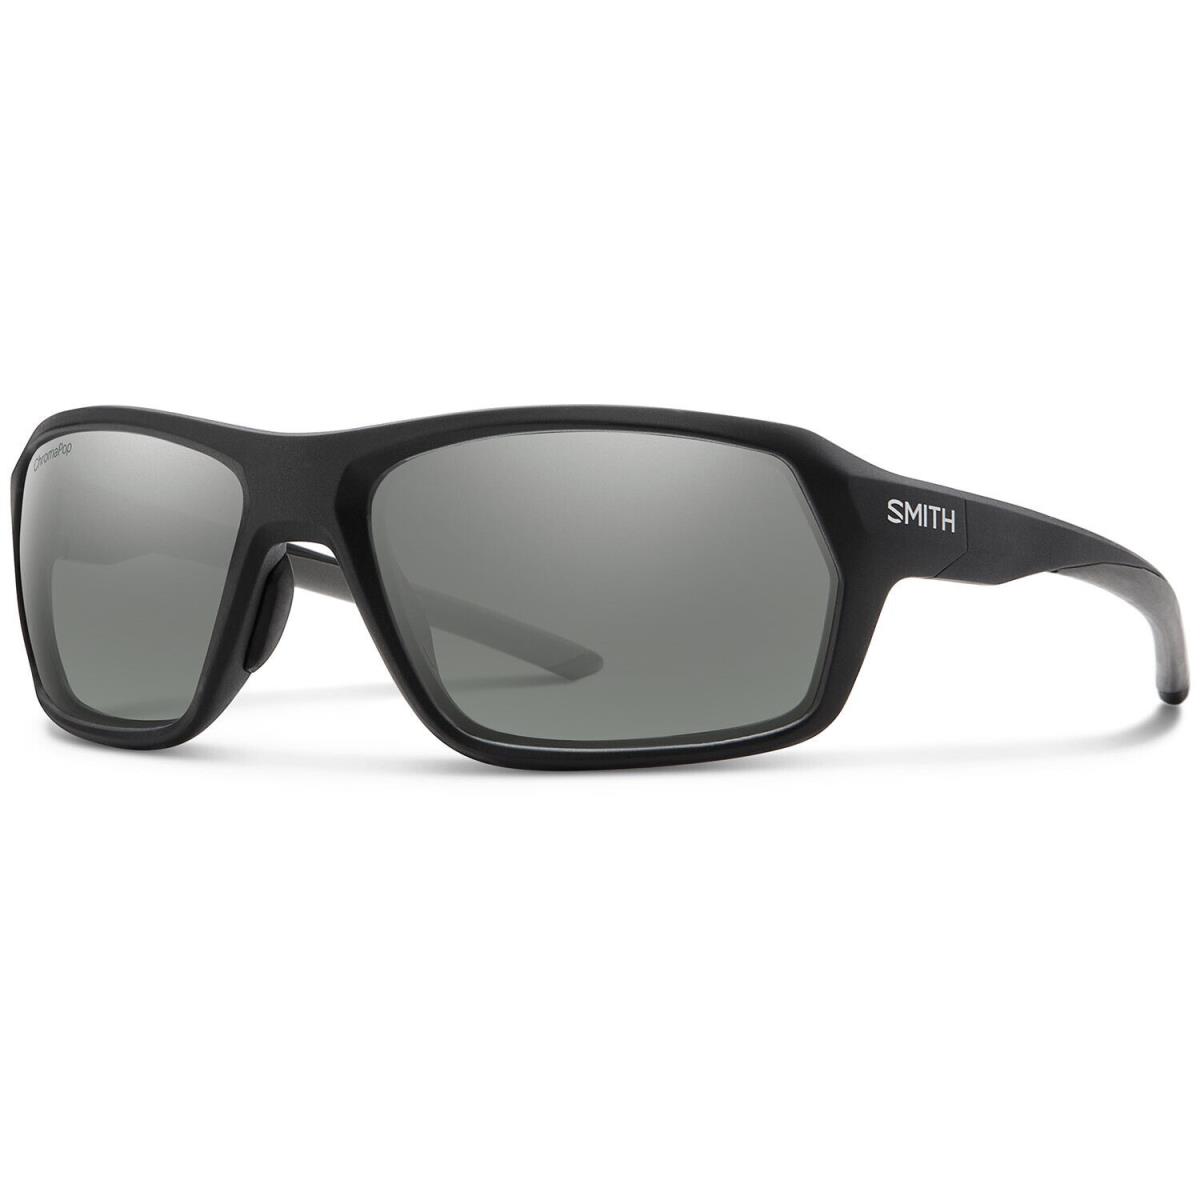 Smith Optics Rebound Sunglasses Photochromic Clear to Gray Black Frame - Frame: Black, Lens: Gray